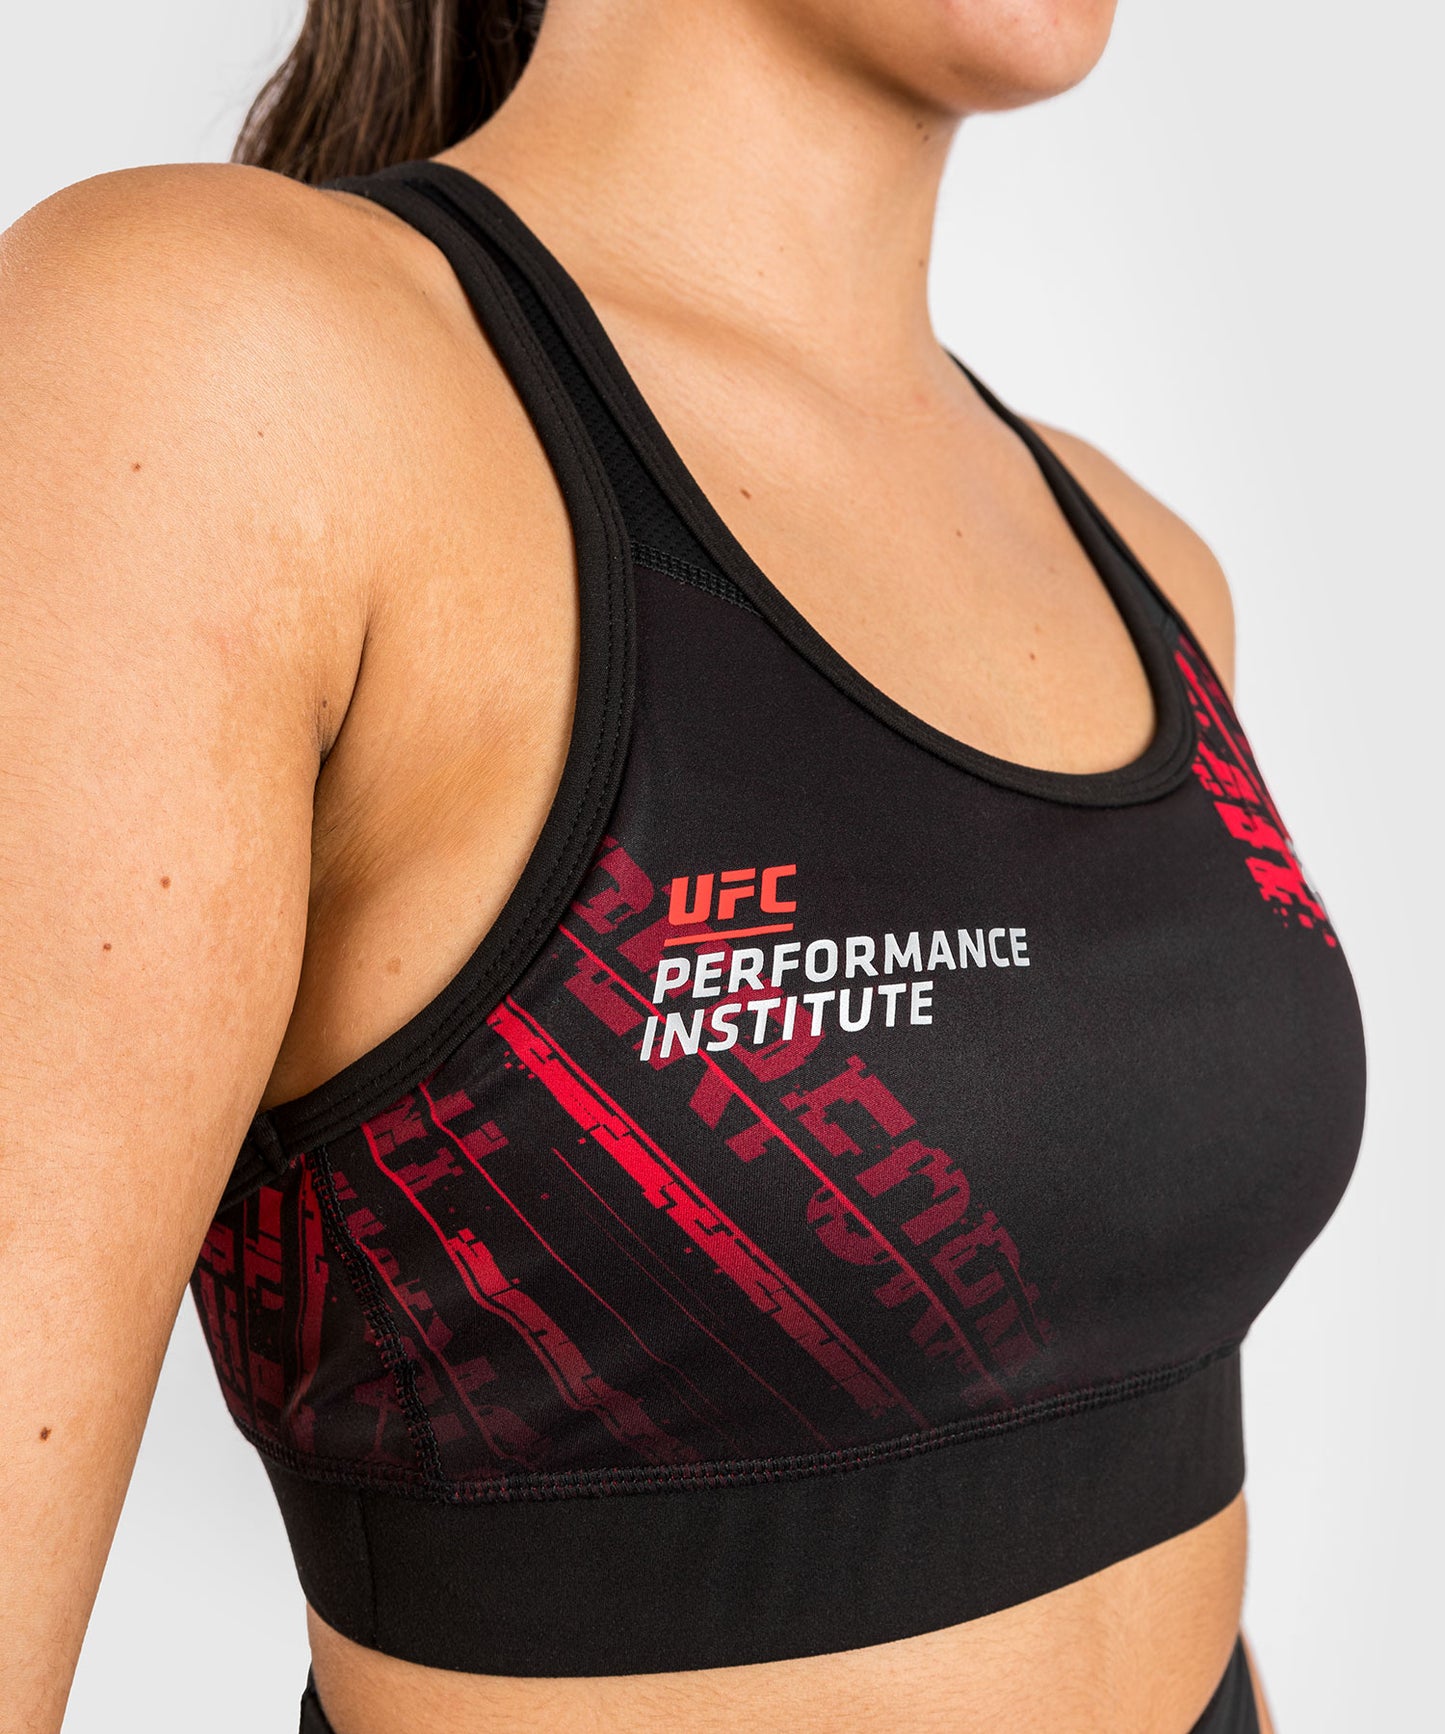 UFC Performance Institute 2.0 Sujetador deportivo para mujer - Negro/Rojo